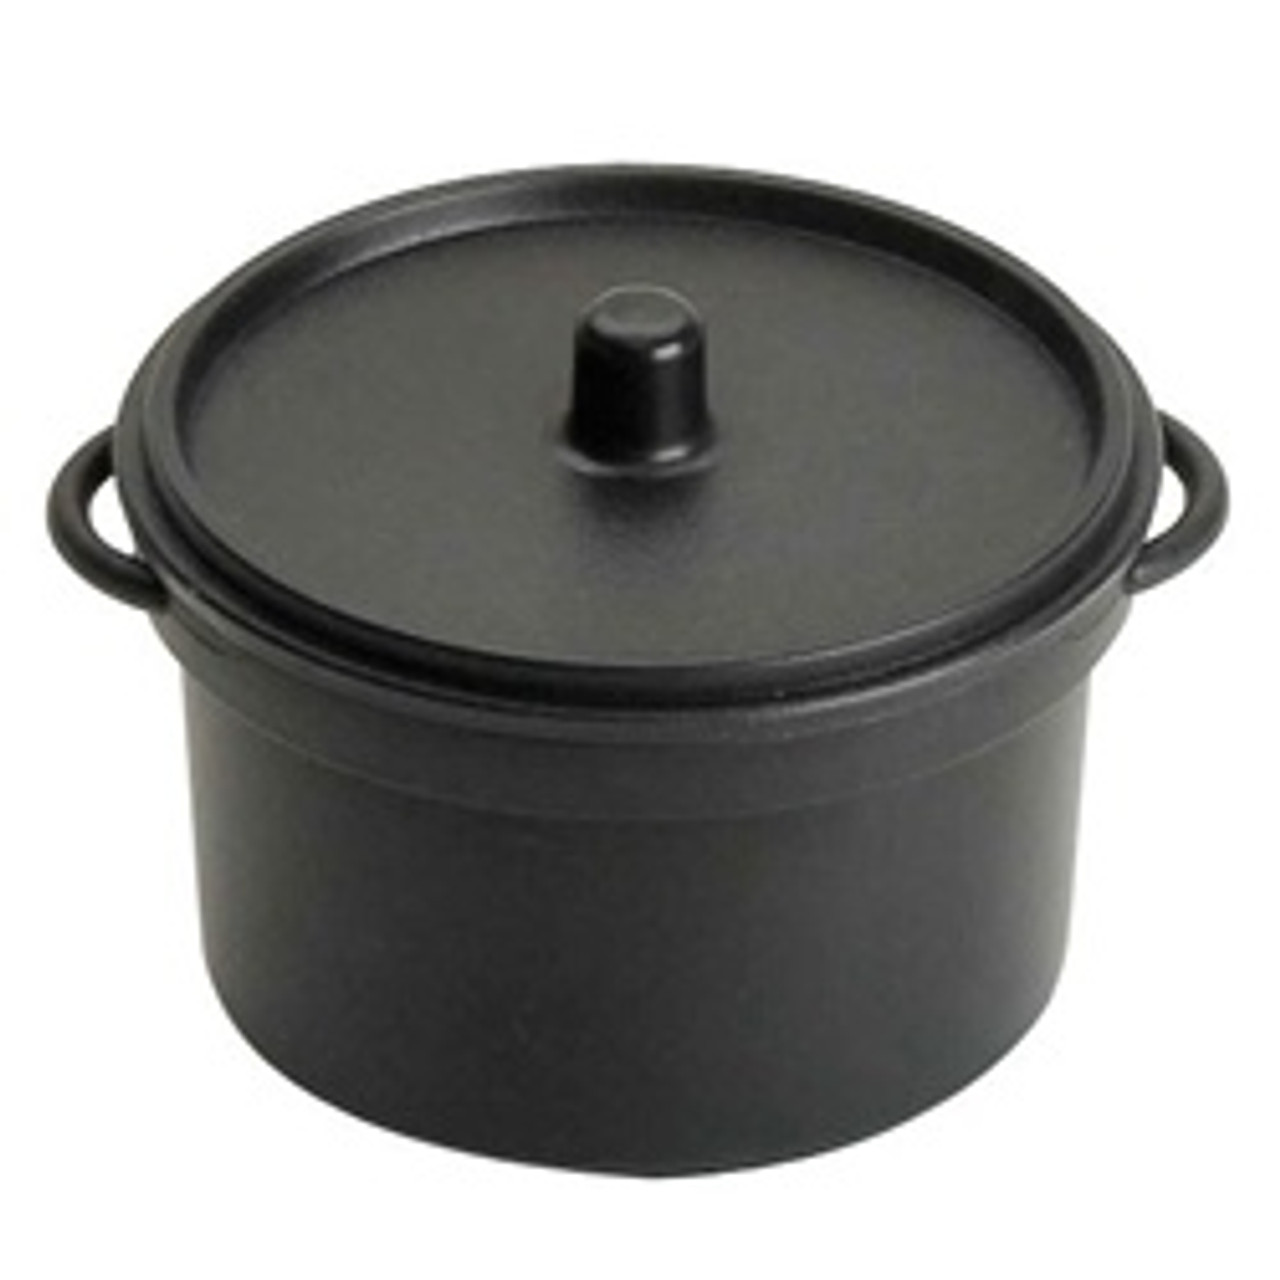 Small Wonder Black Micro Cooking Pot